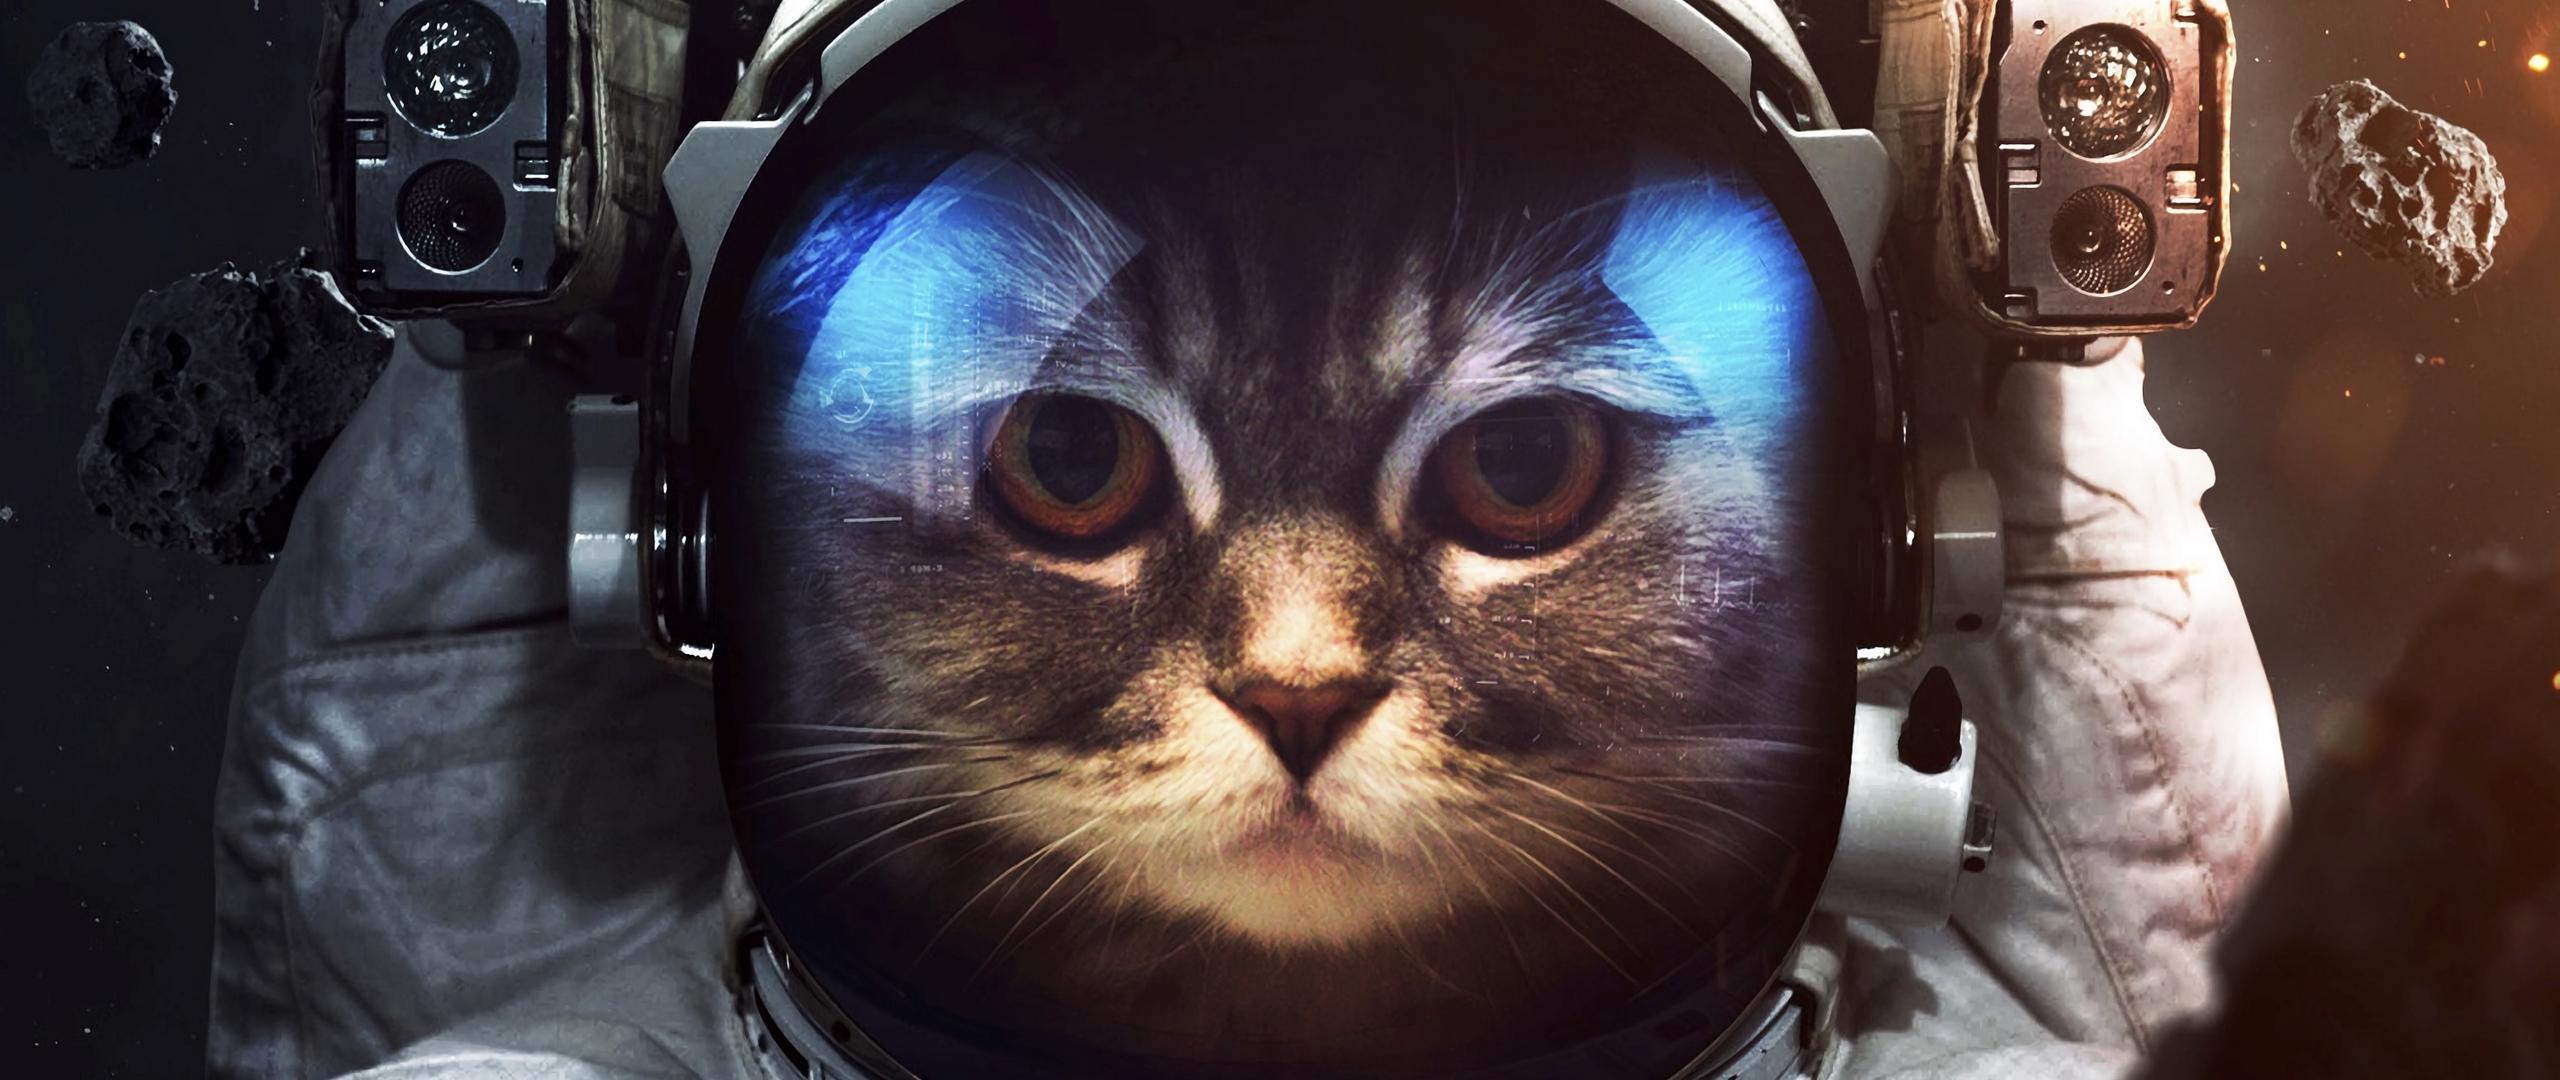 Download wallpaper 2560x1080 cat, cosmonaut, space suit, space dual